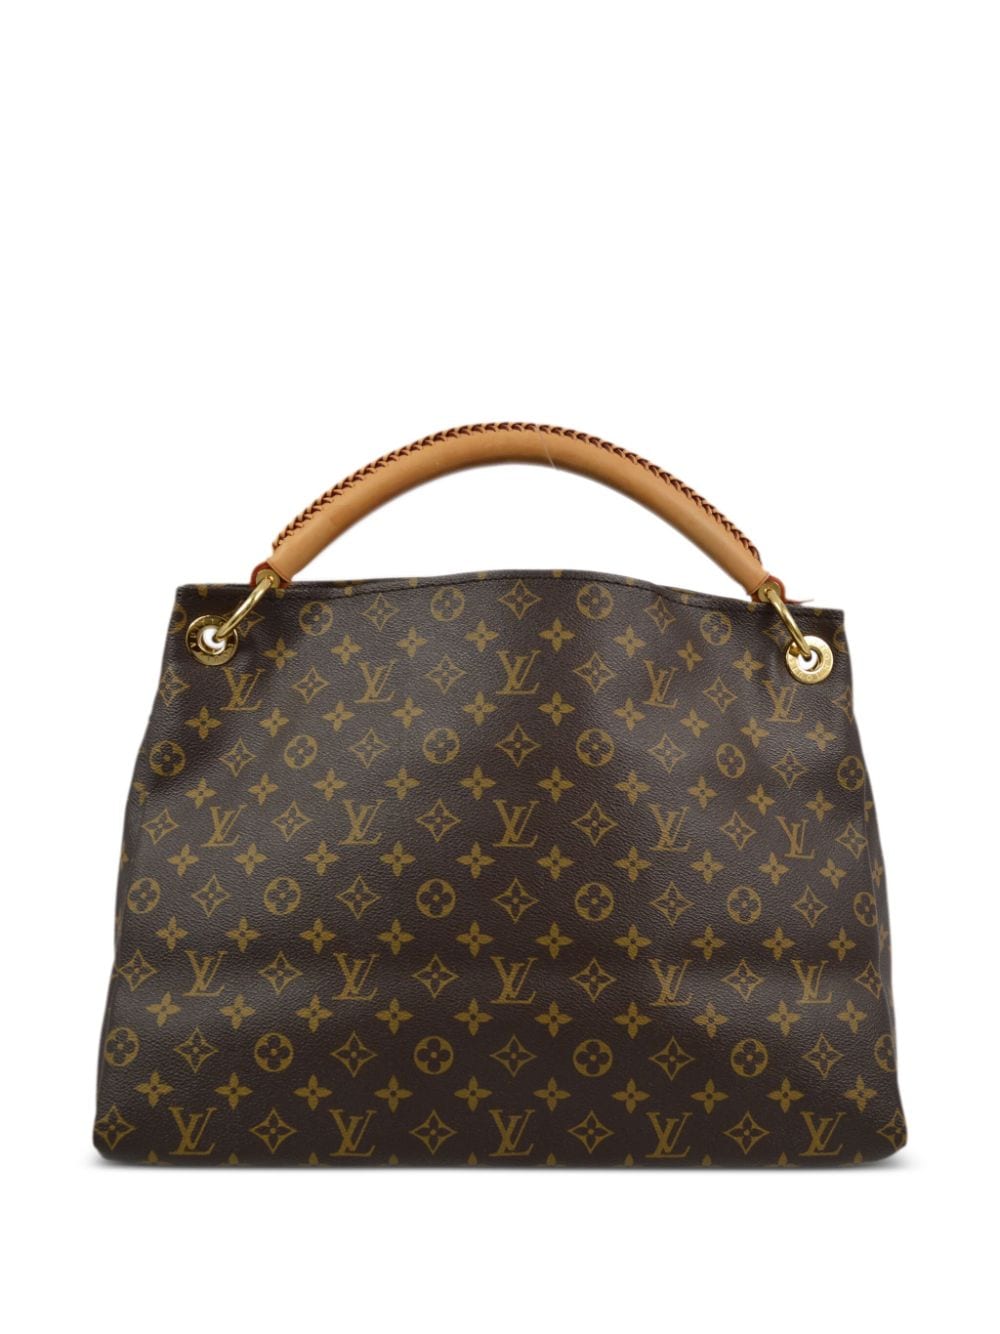 Pre-owned Louis Vuitton 2010 Artsy Mm Handbag In Brown